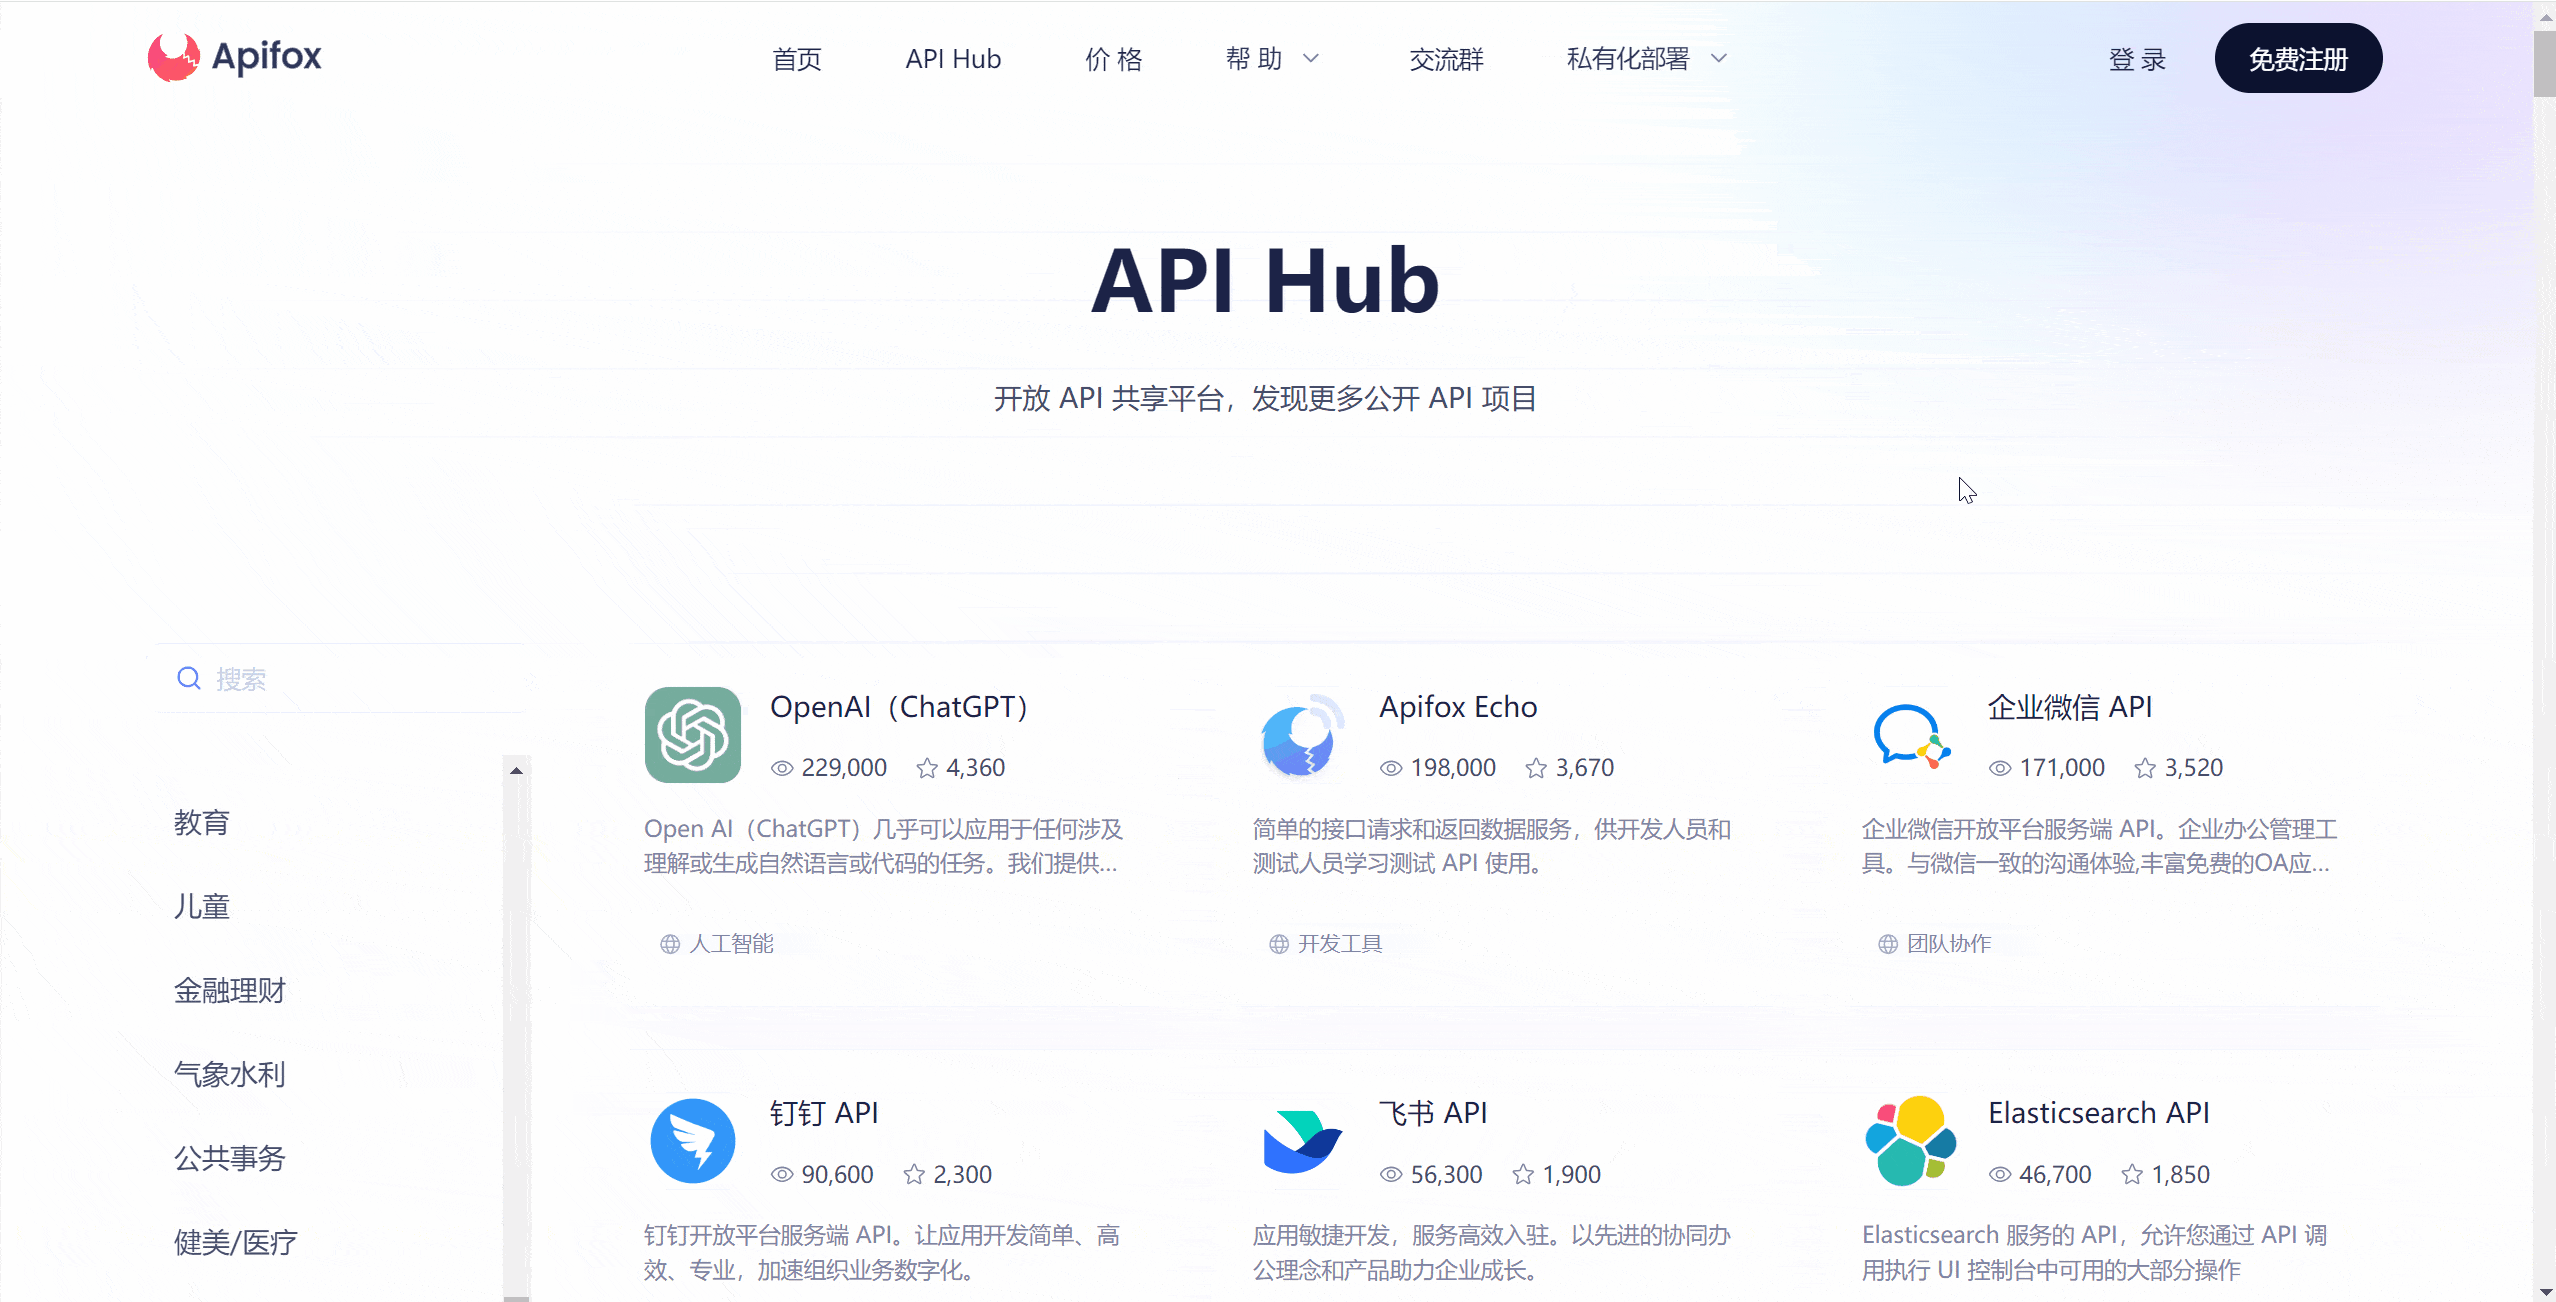 Apifox API Hub